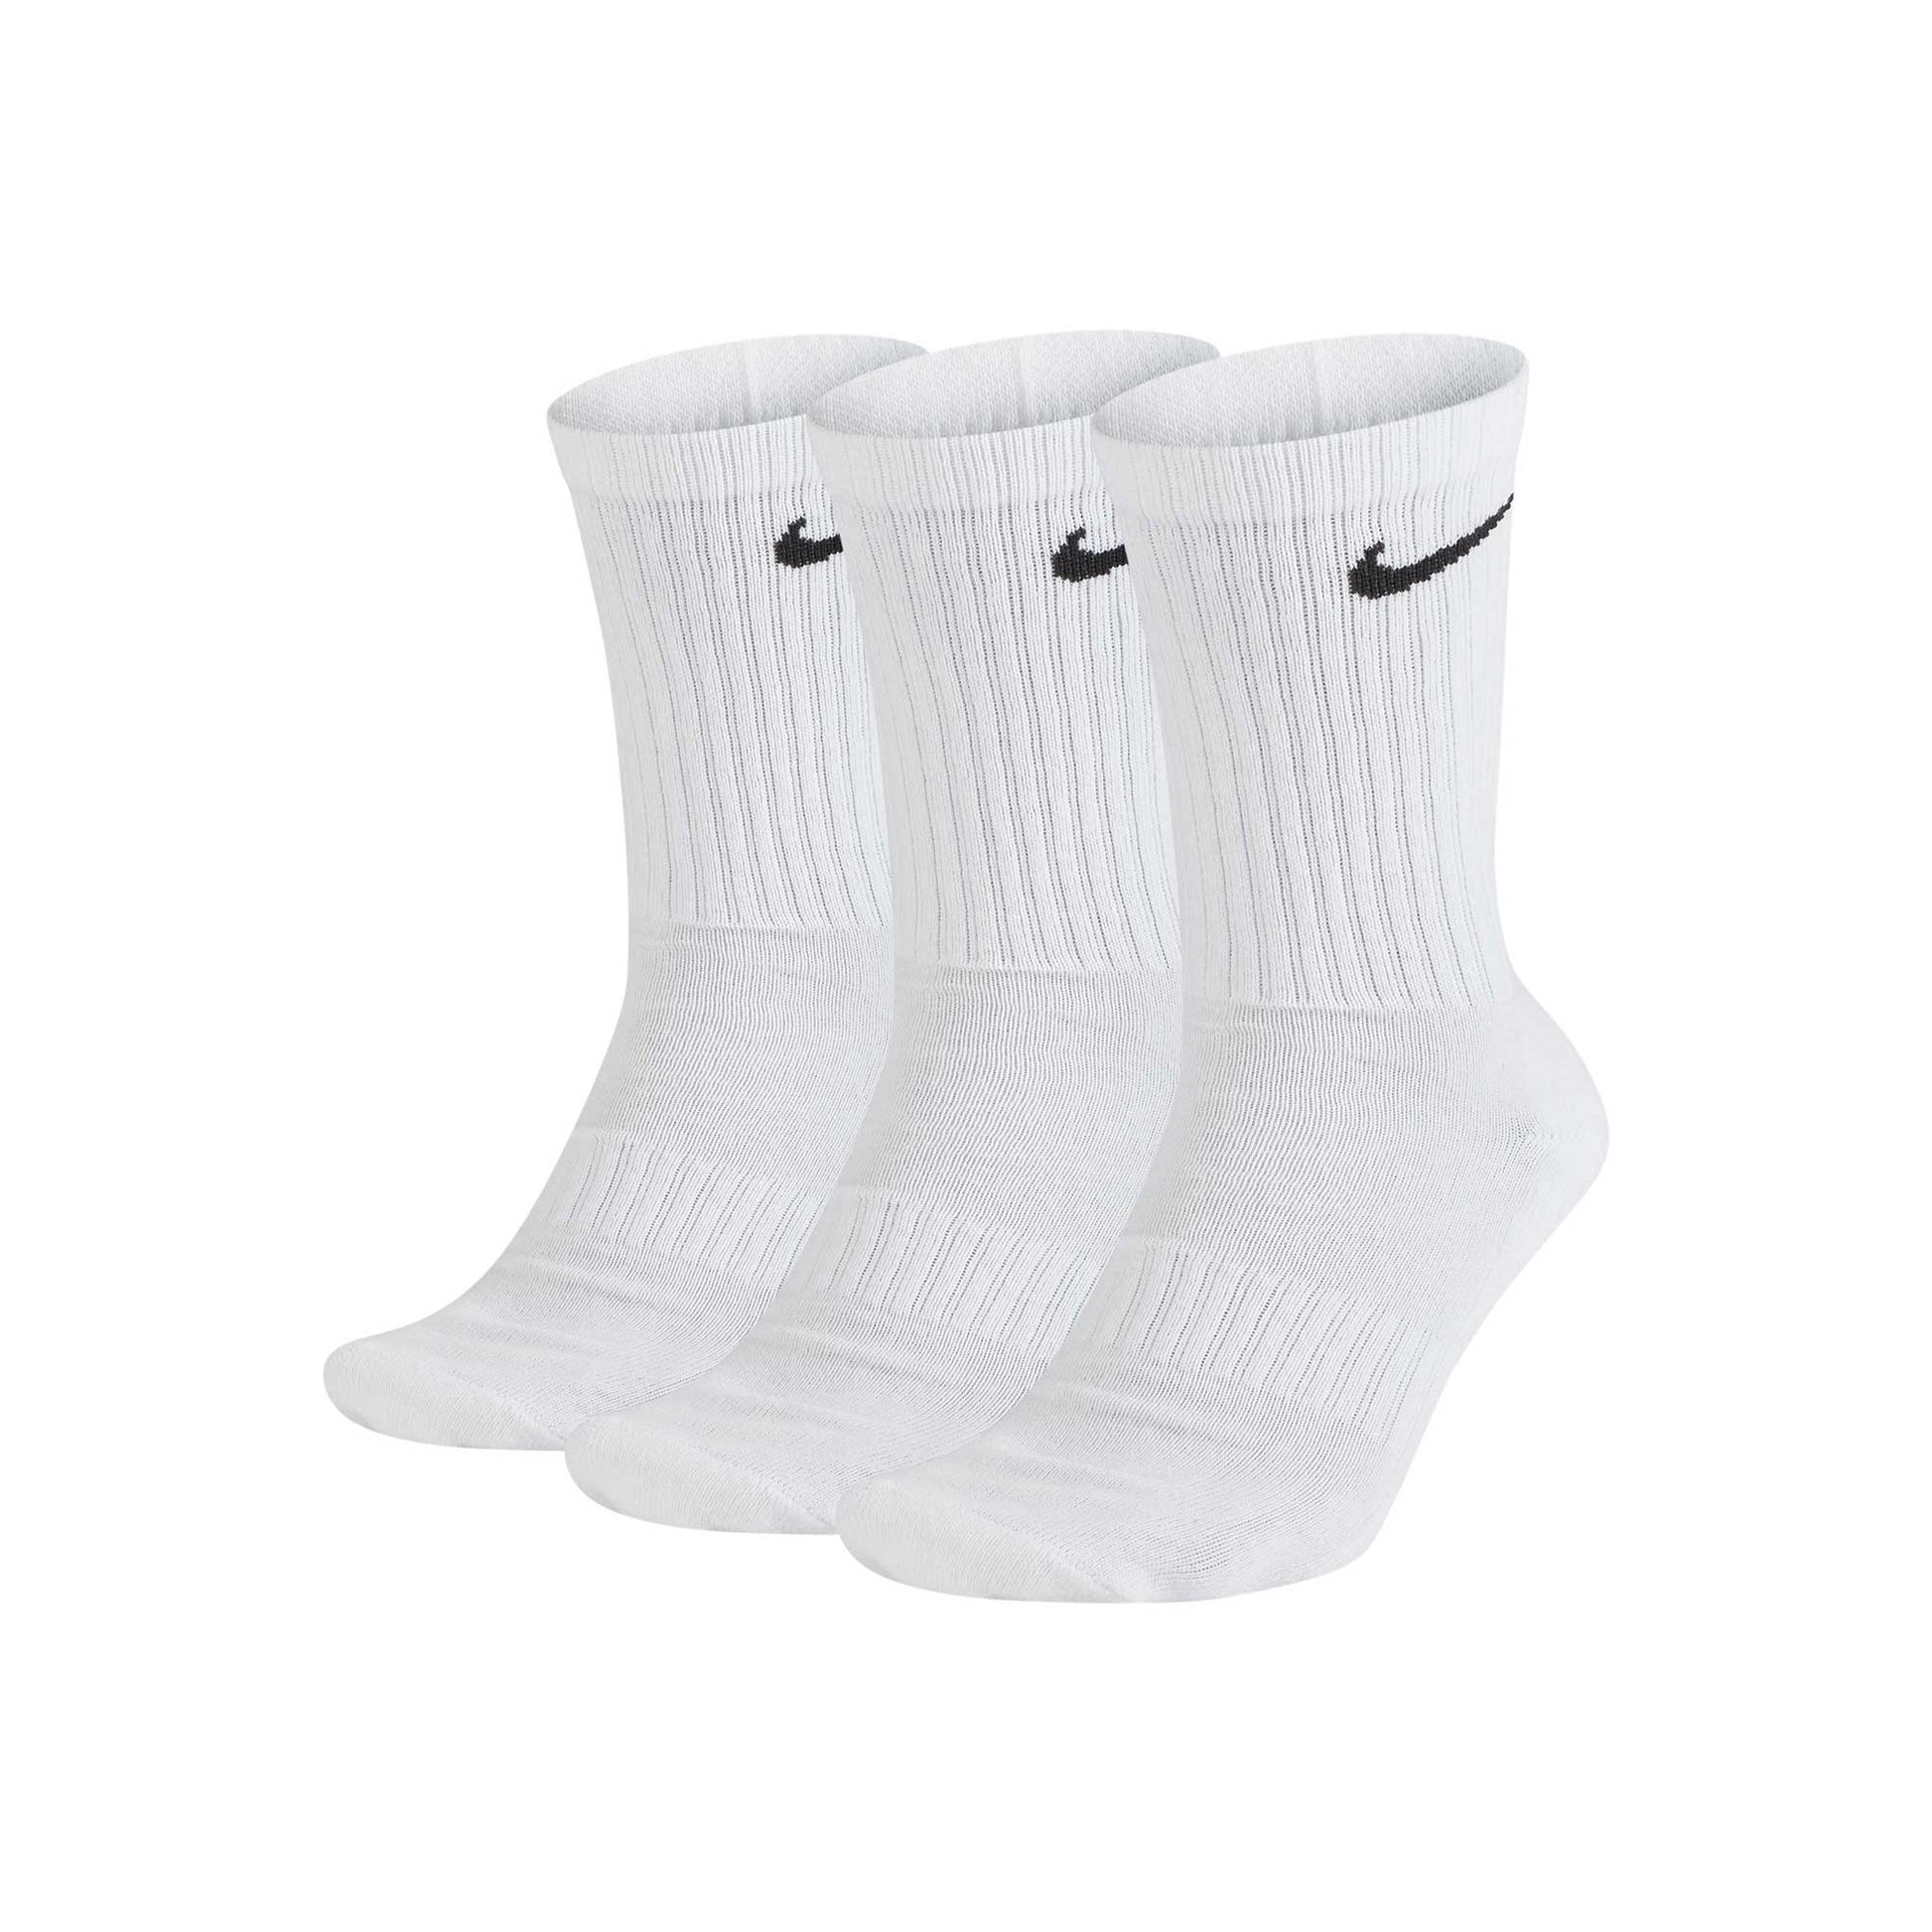 Nike SB Everyday Cushioned Training Crew Socks (3 Pairs), white - Tiki Room Skateboards - 1